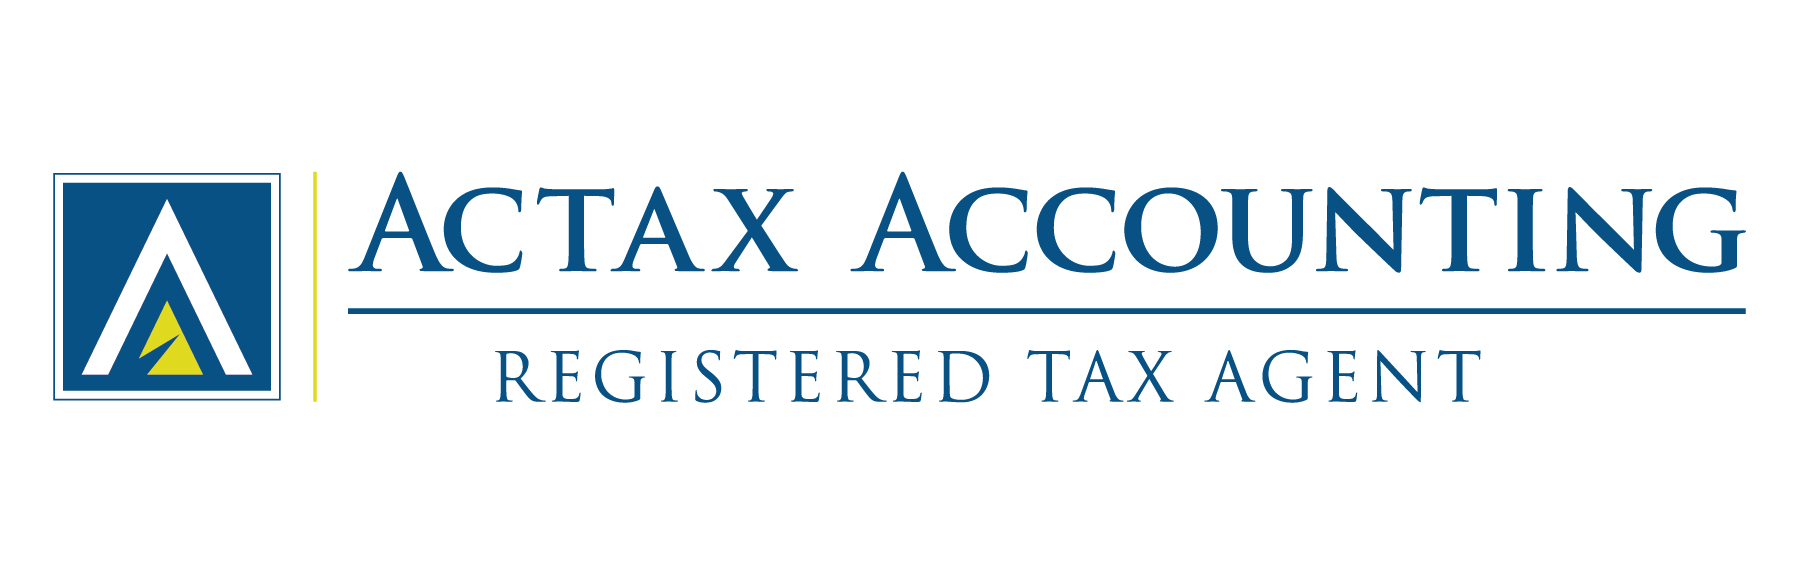 Actax Accounting